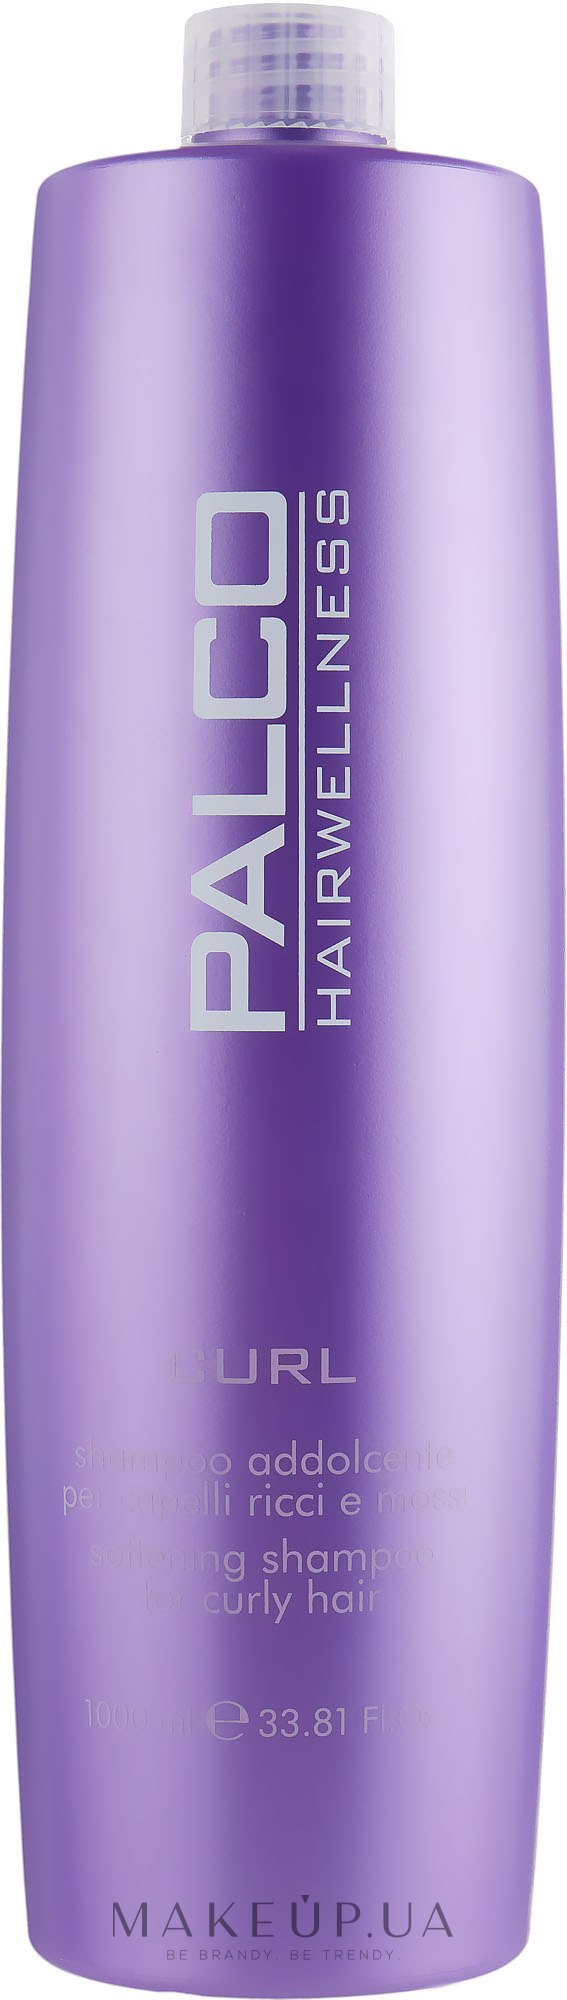 Пом’якшувальний шампунь для кучерявого волосся - Palco Professional Curl Shampoo Addolcente — фото 1000ml